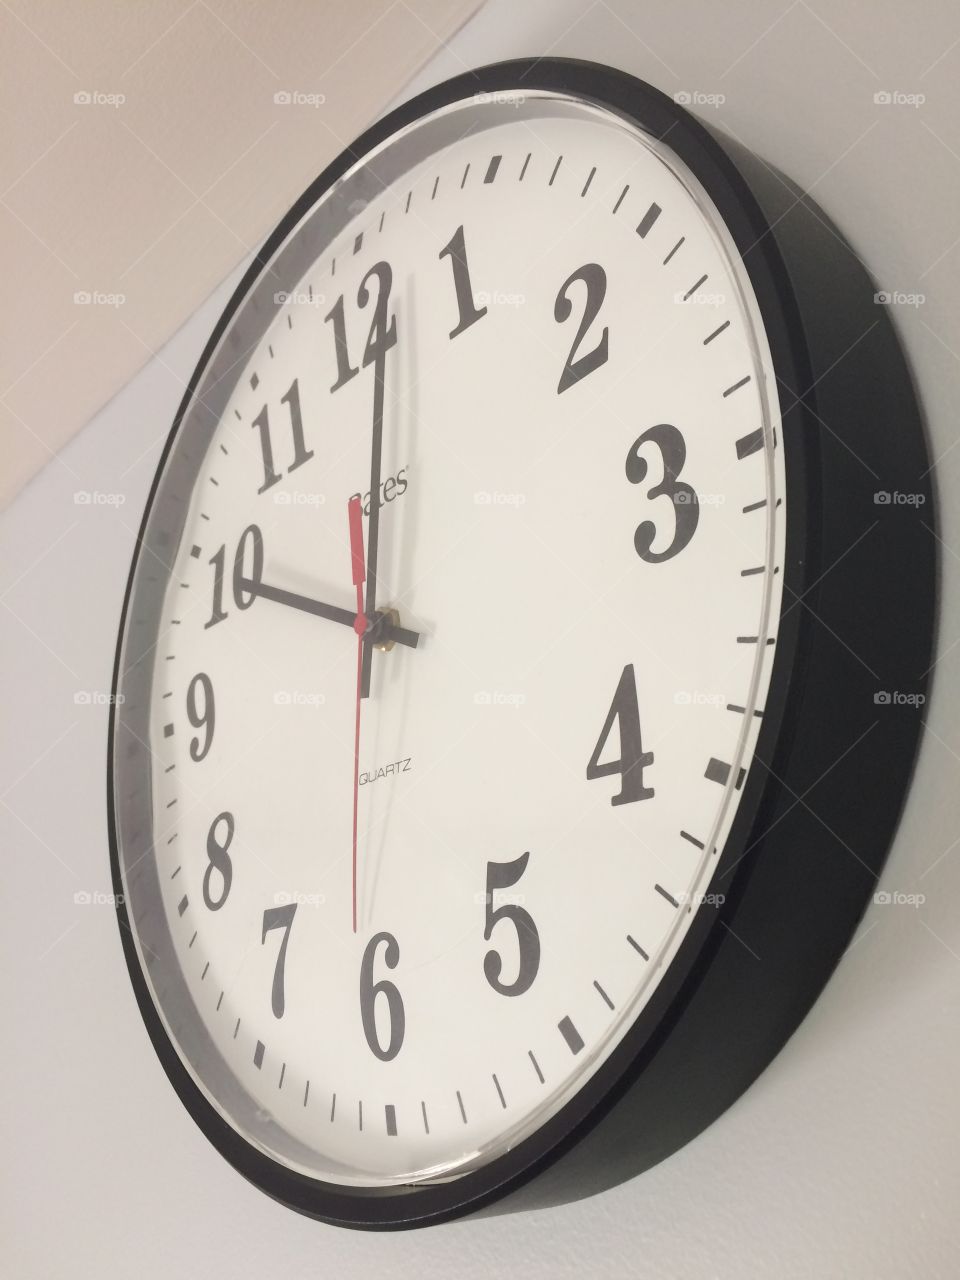 The clock says it's break time!